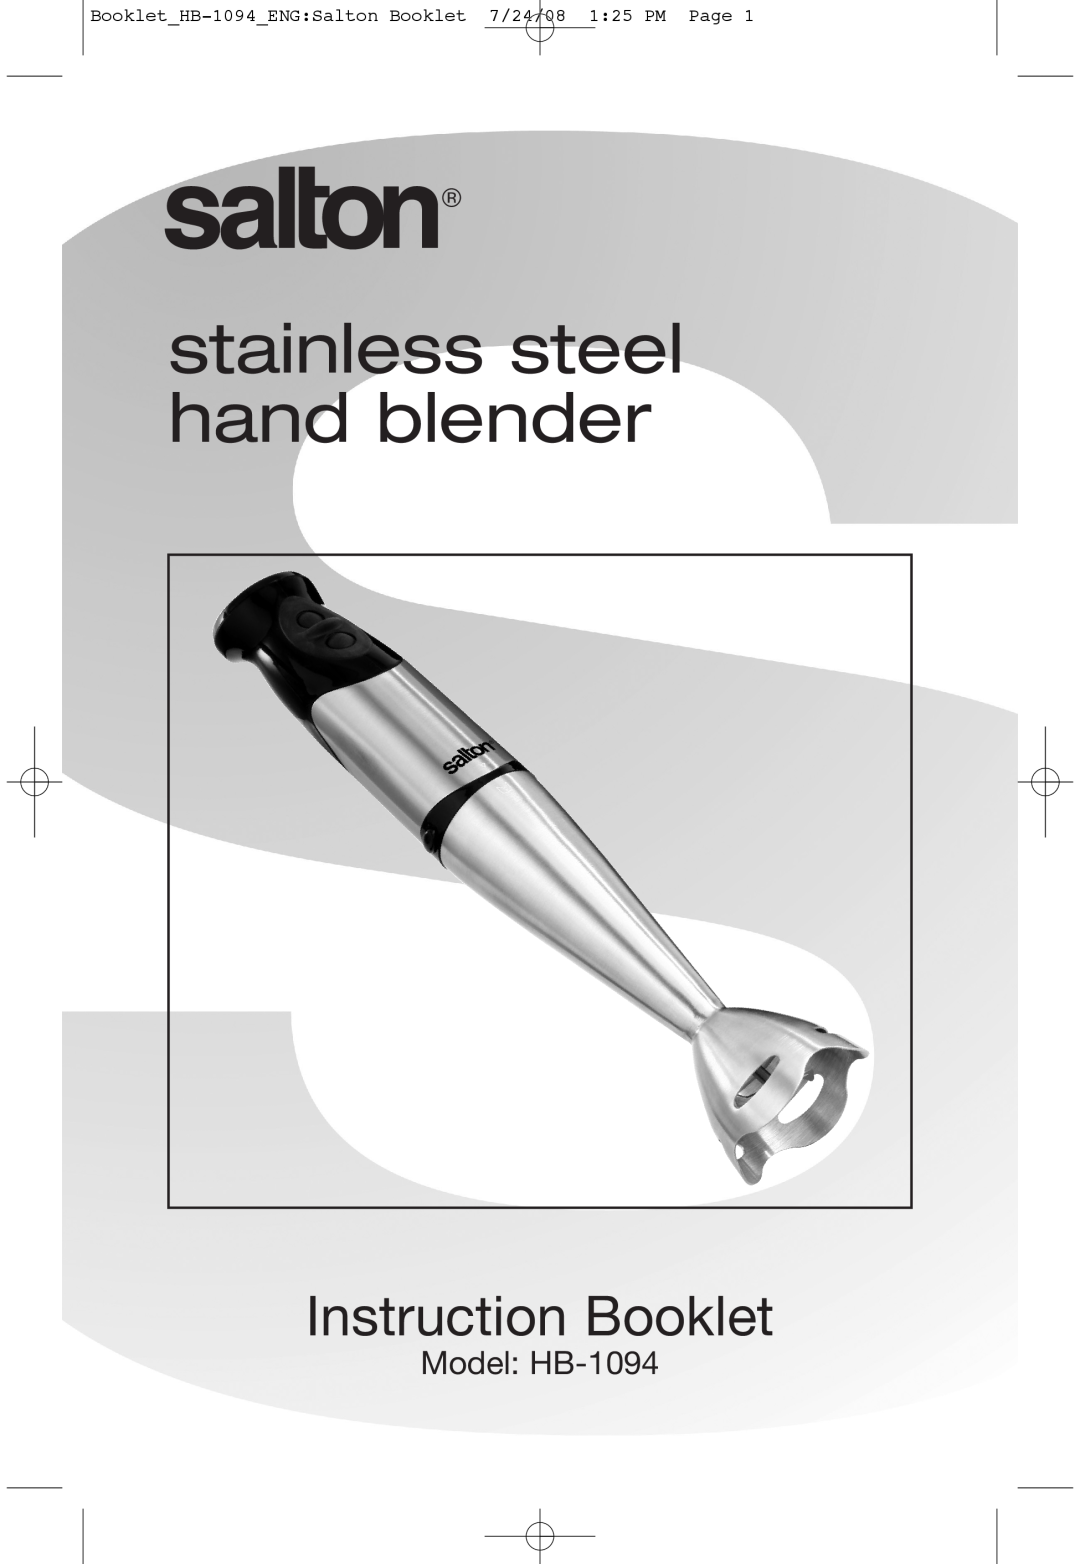 Salton manual stainless steel hand blender, Instruction Booklet, Model HB-1094 